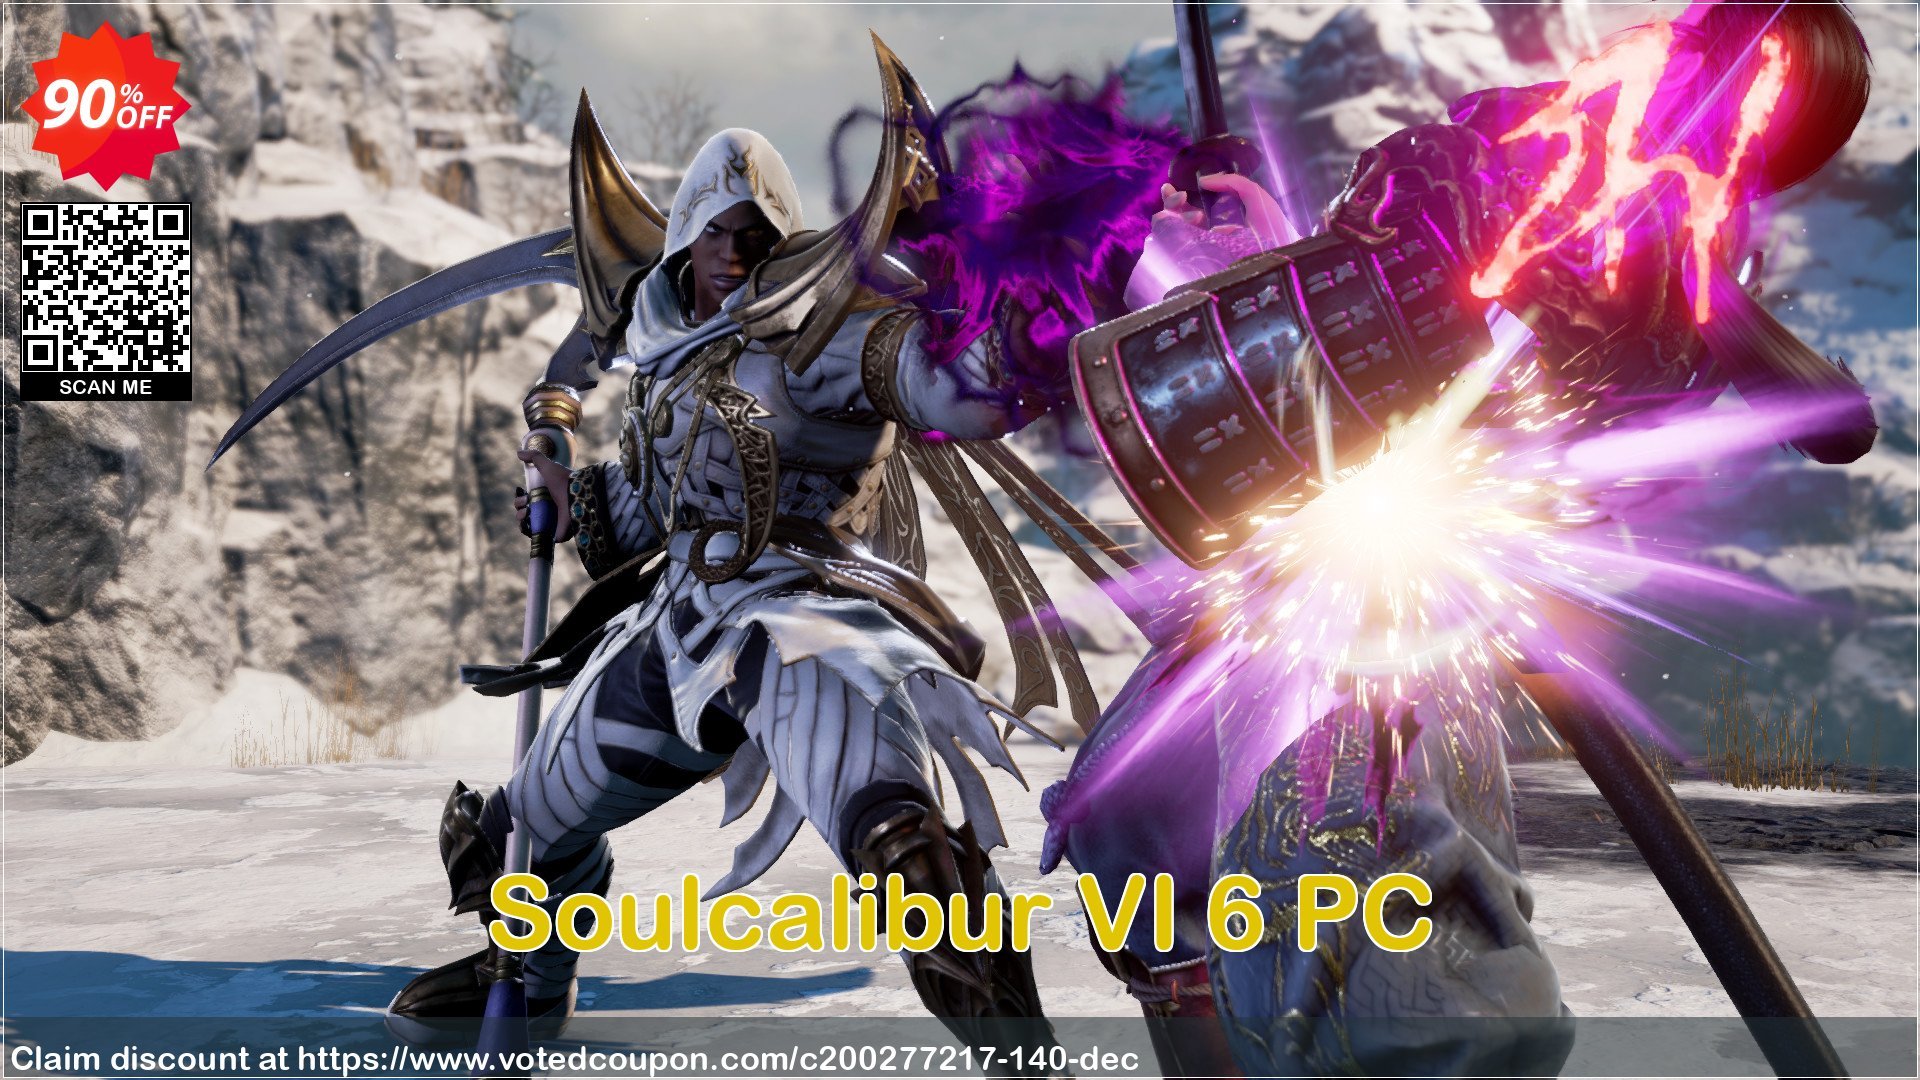 Soulcalibur VI 6 PC voted-on promotion codes